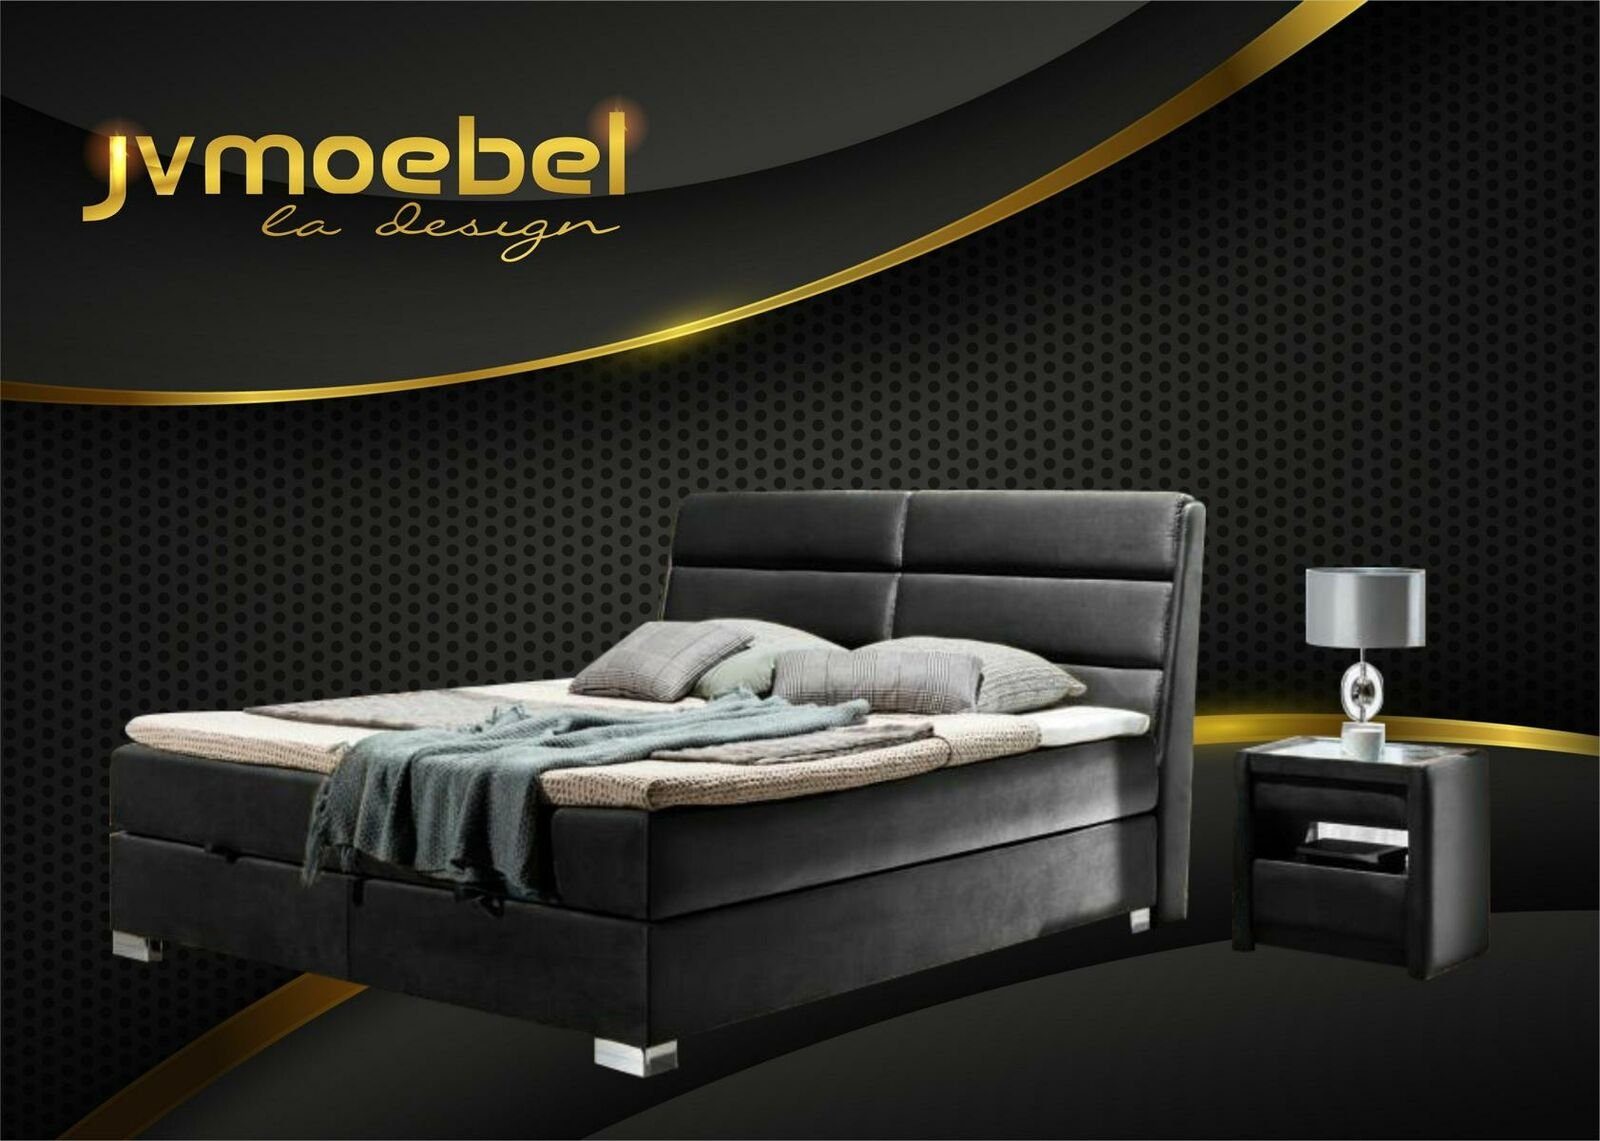 JVmoebel Schlafzimmer-Set, (Set, Bett, x2 Nachttische), Bett 2x Nachttisch 3 tlg. Schlafzimmer Set Design Möbel Modern Luxus Betten Neu Schwarz